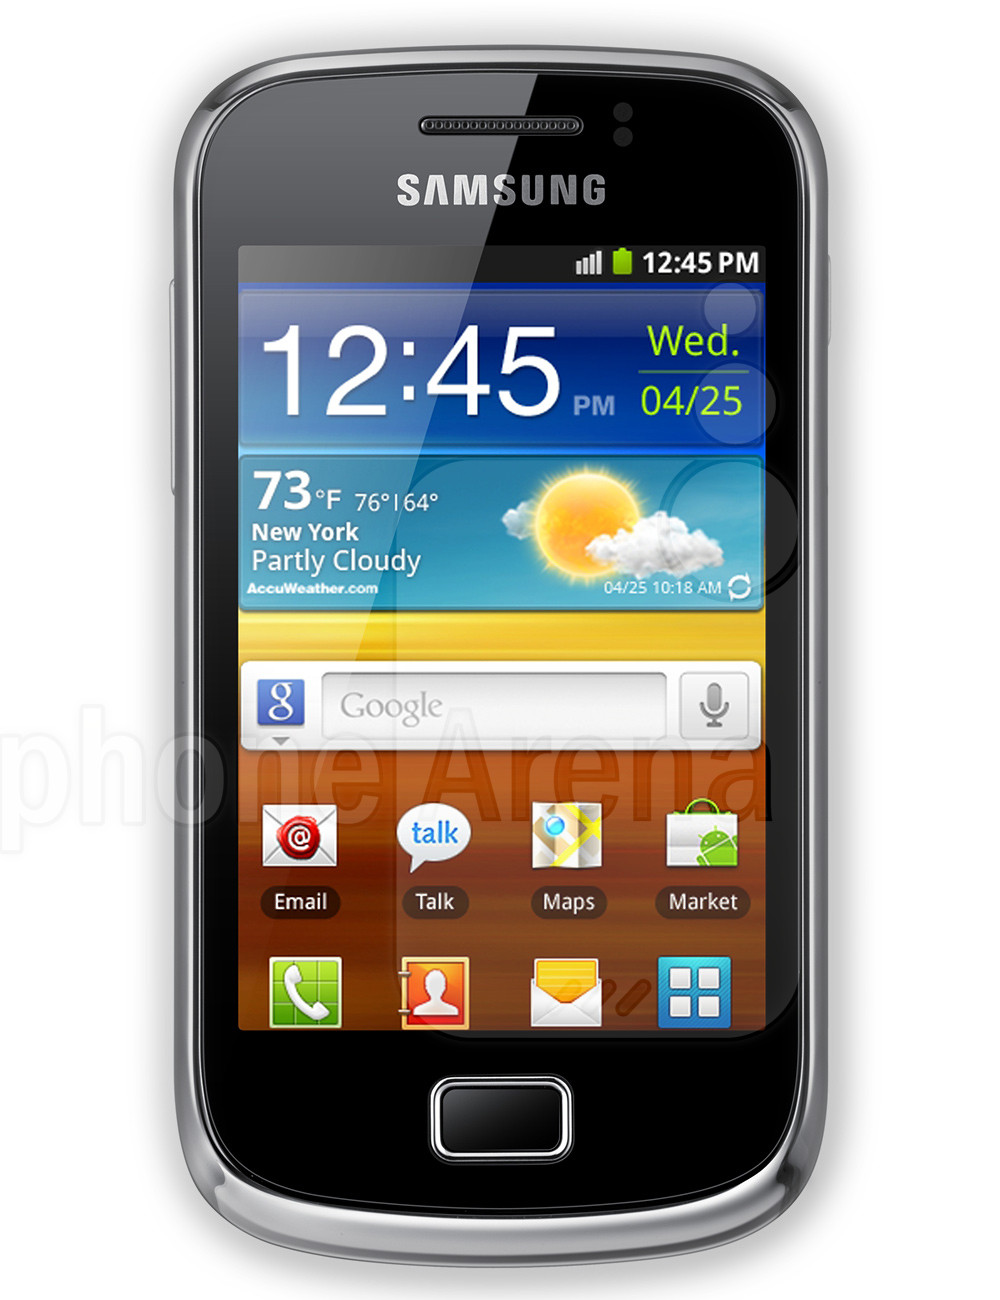 Samsung Galaxy Mini 2   Wikipedia  the free encyclopedia